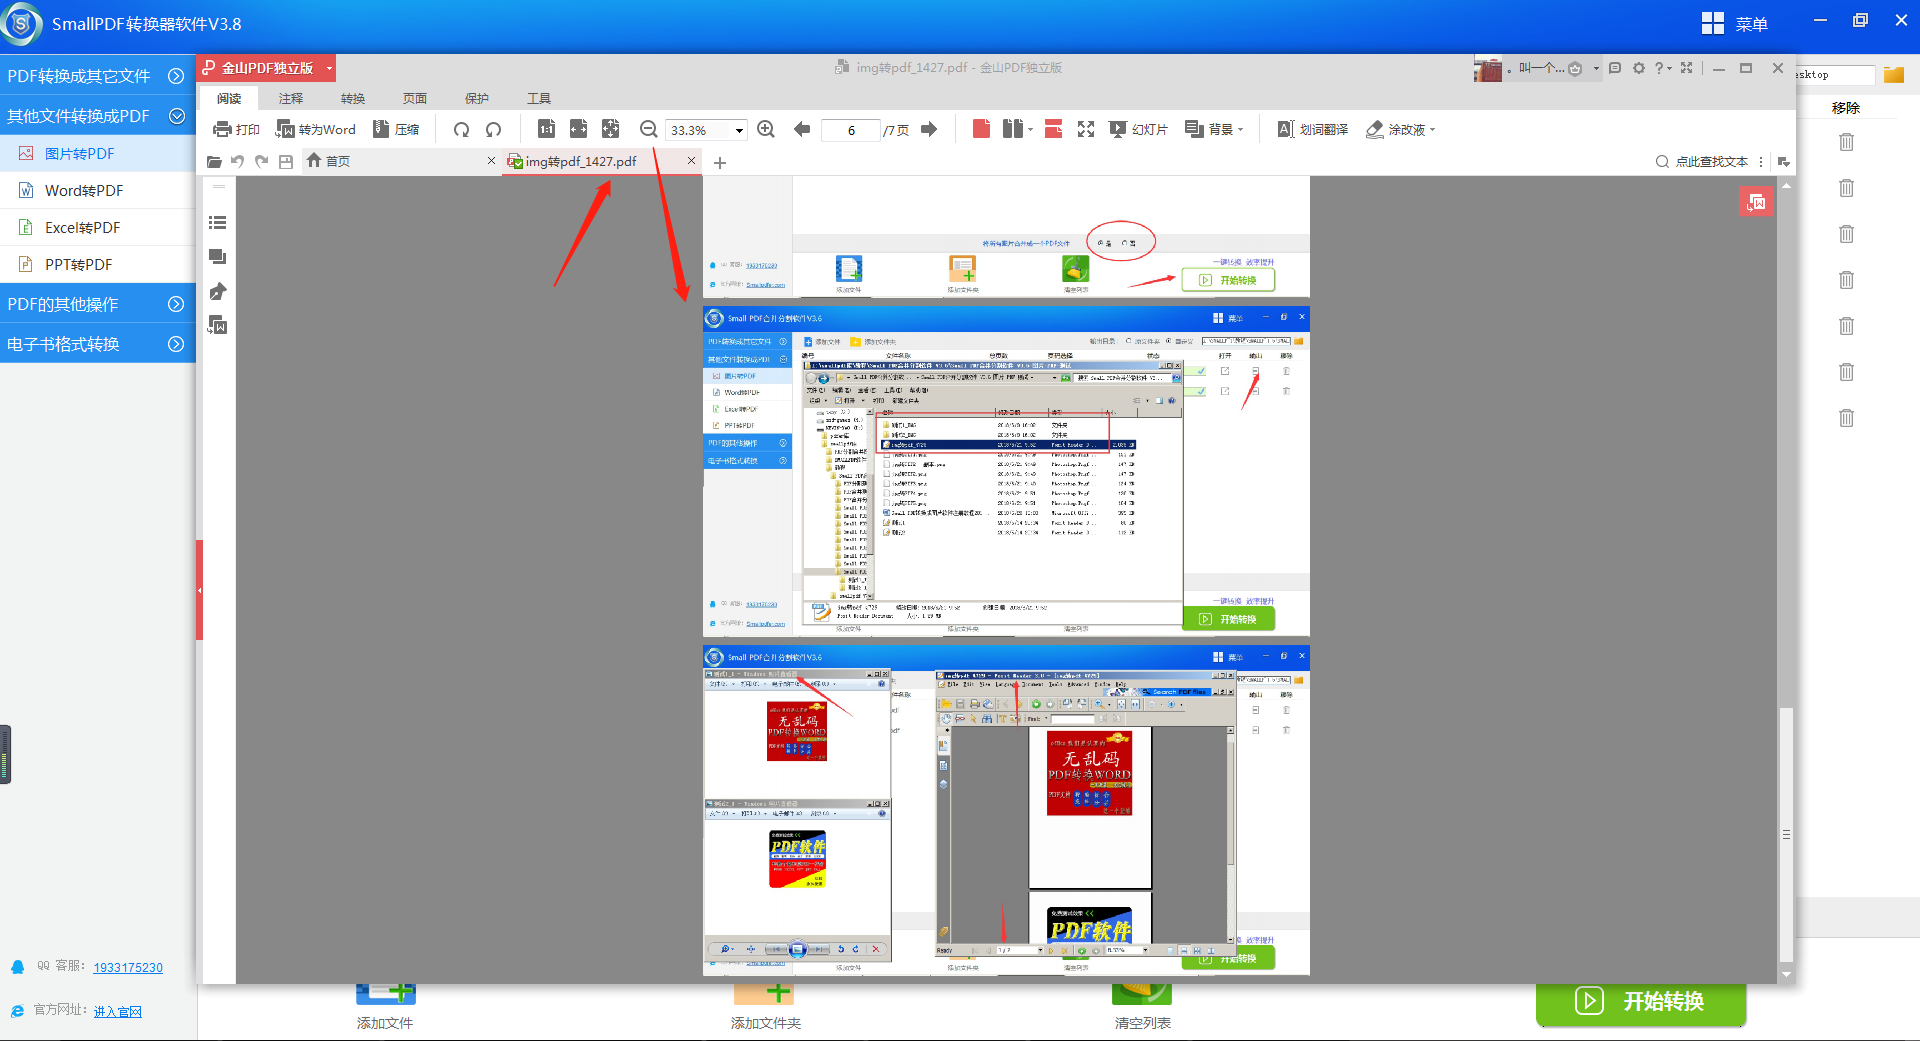 smallpdf转换器软件V3.8的图片转换成PDF操作流程-3